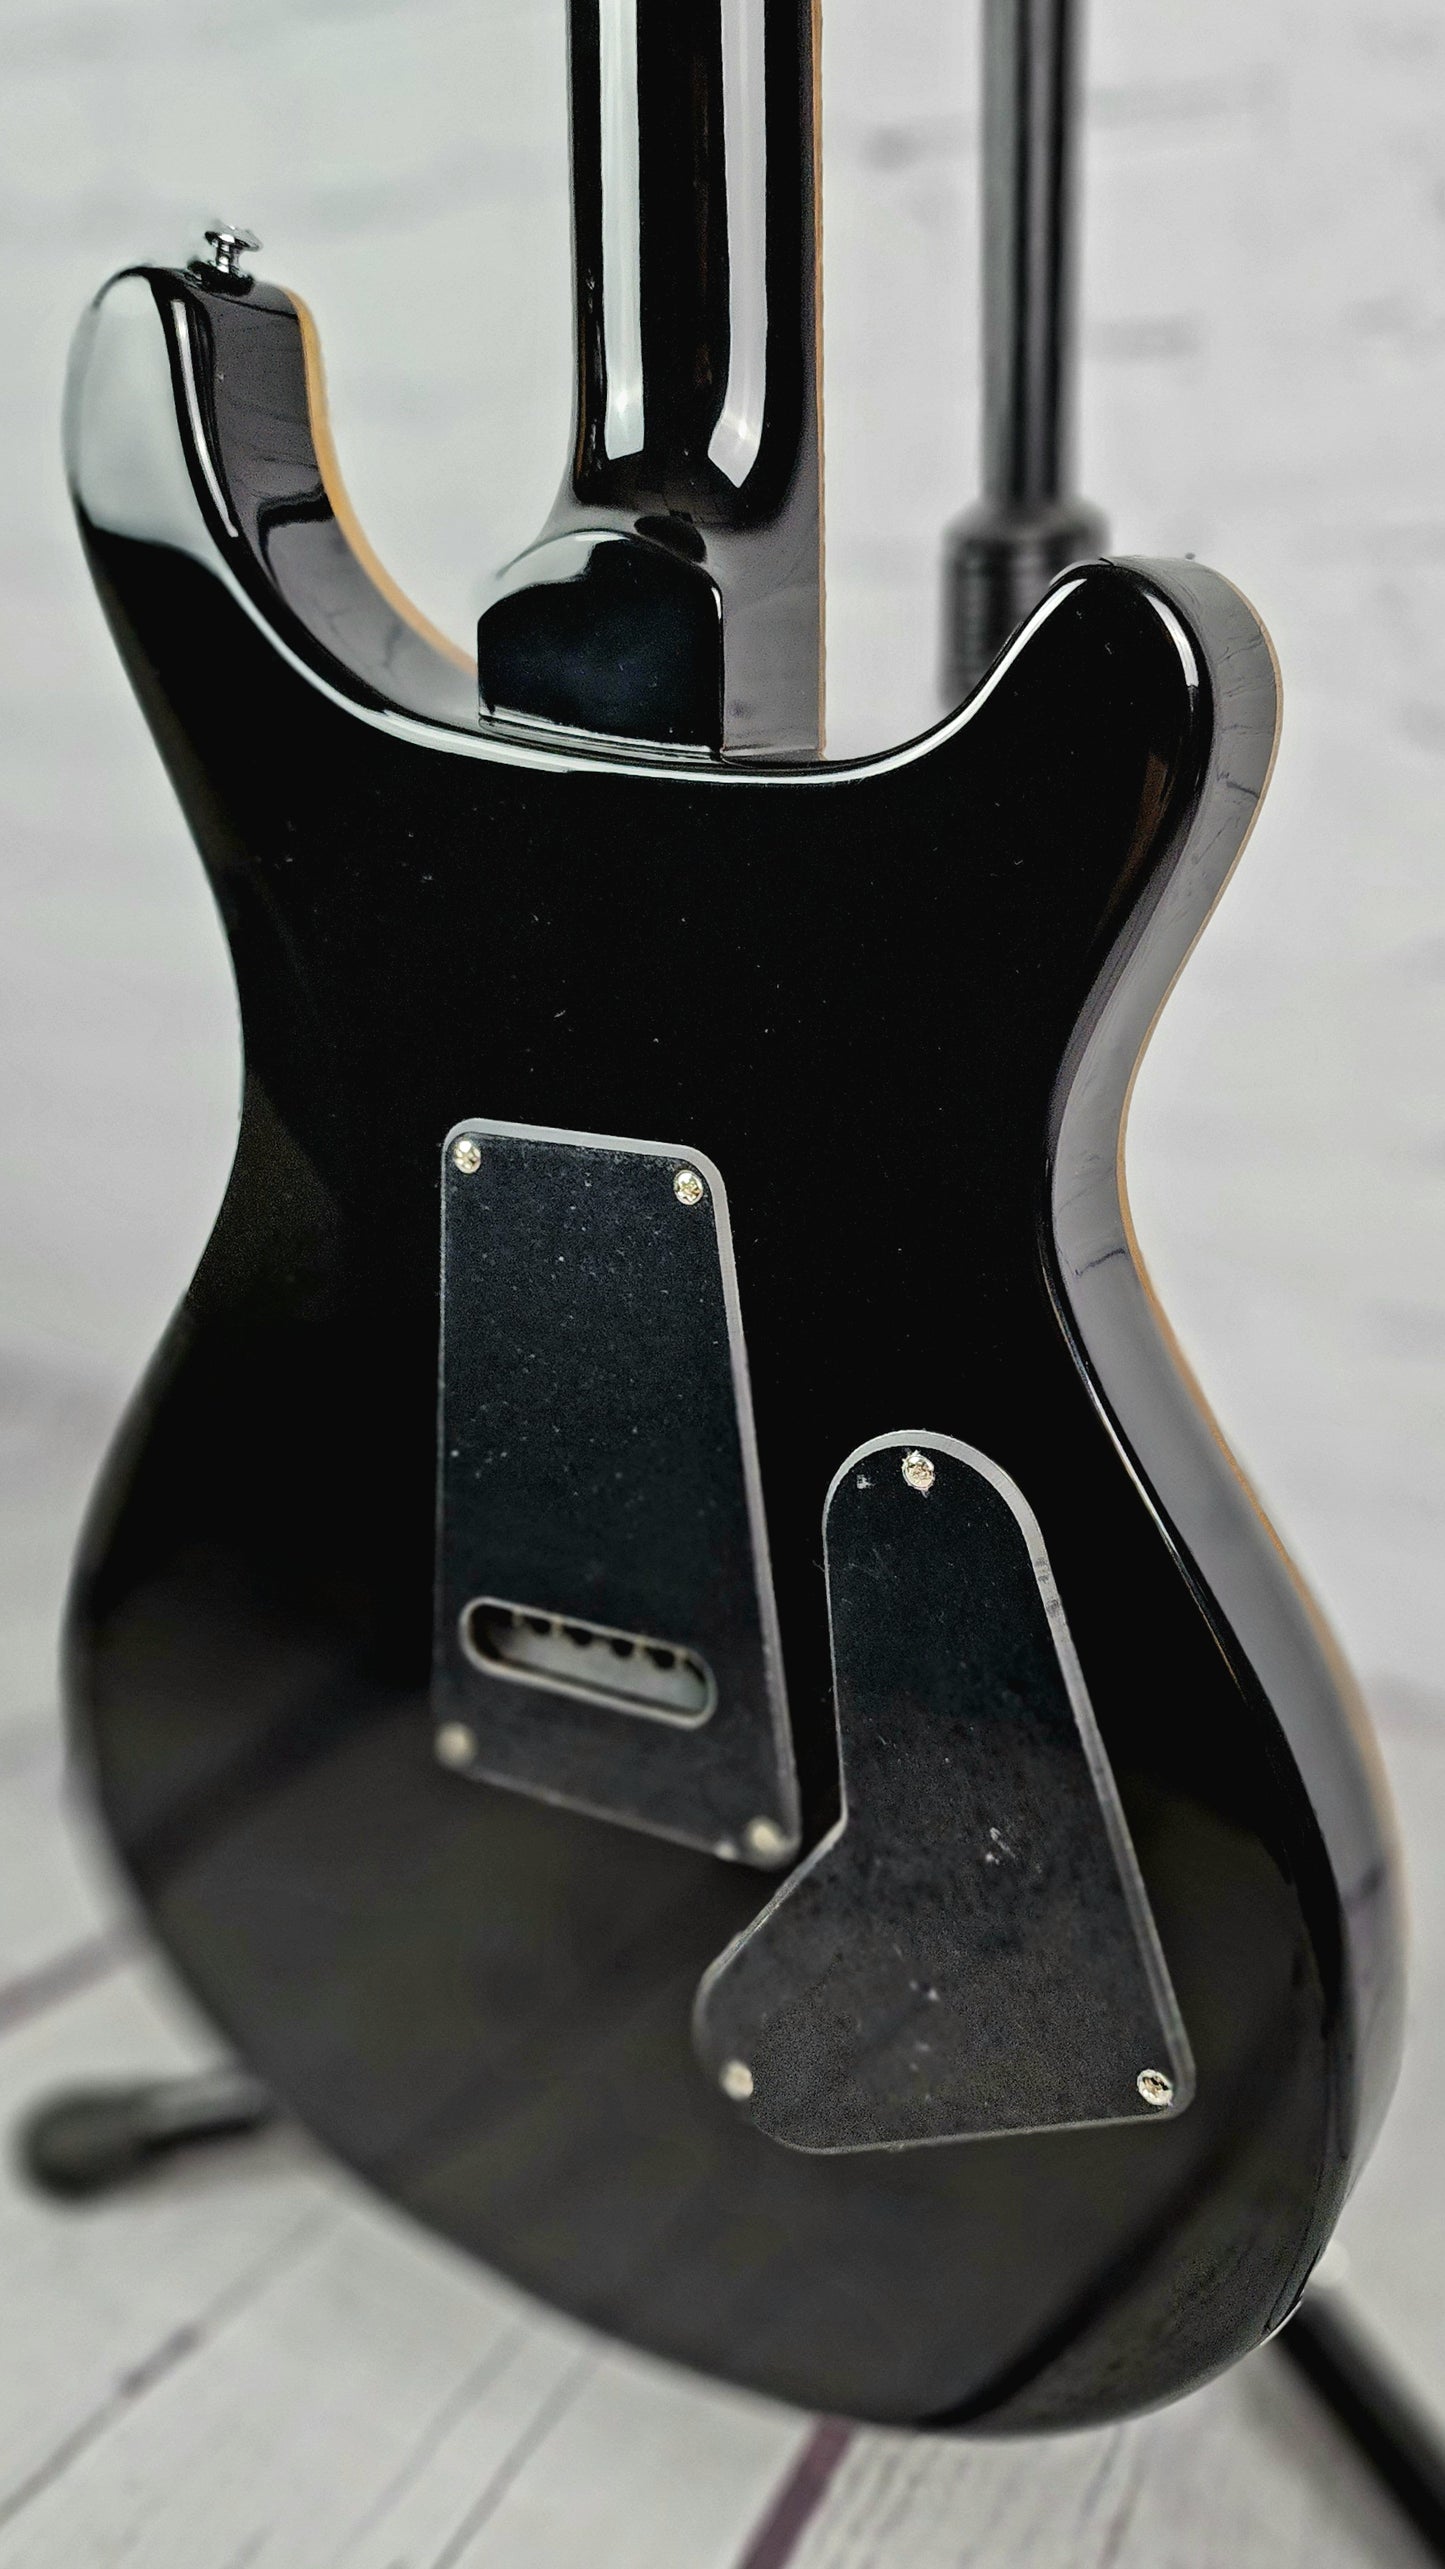 Paul Reed Smith PRS SE Custom 24 Left Handed Electric Guitar Black Gold Burst